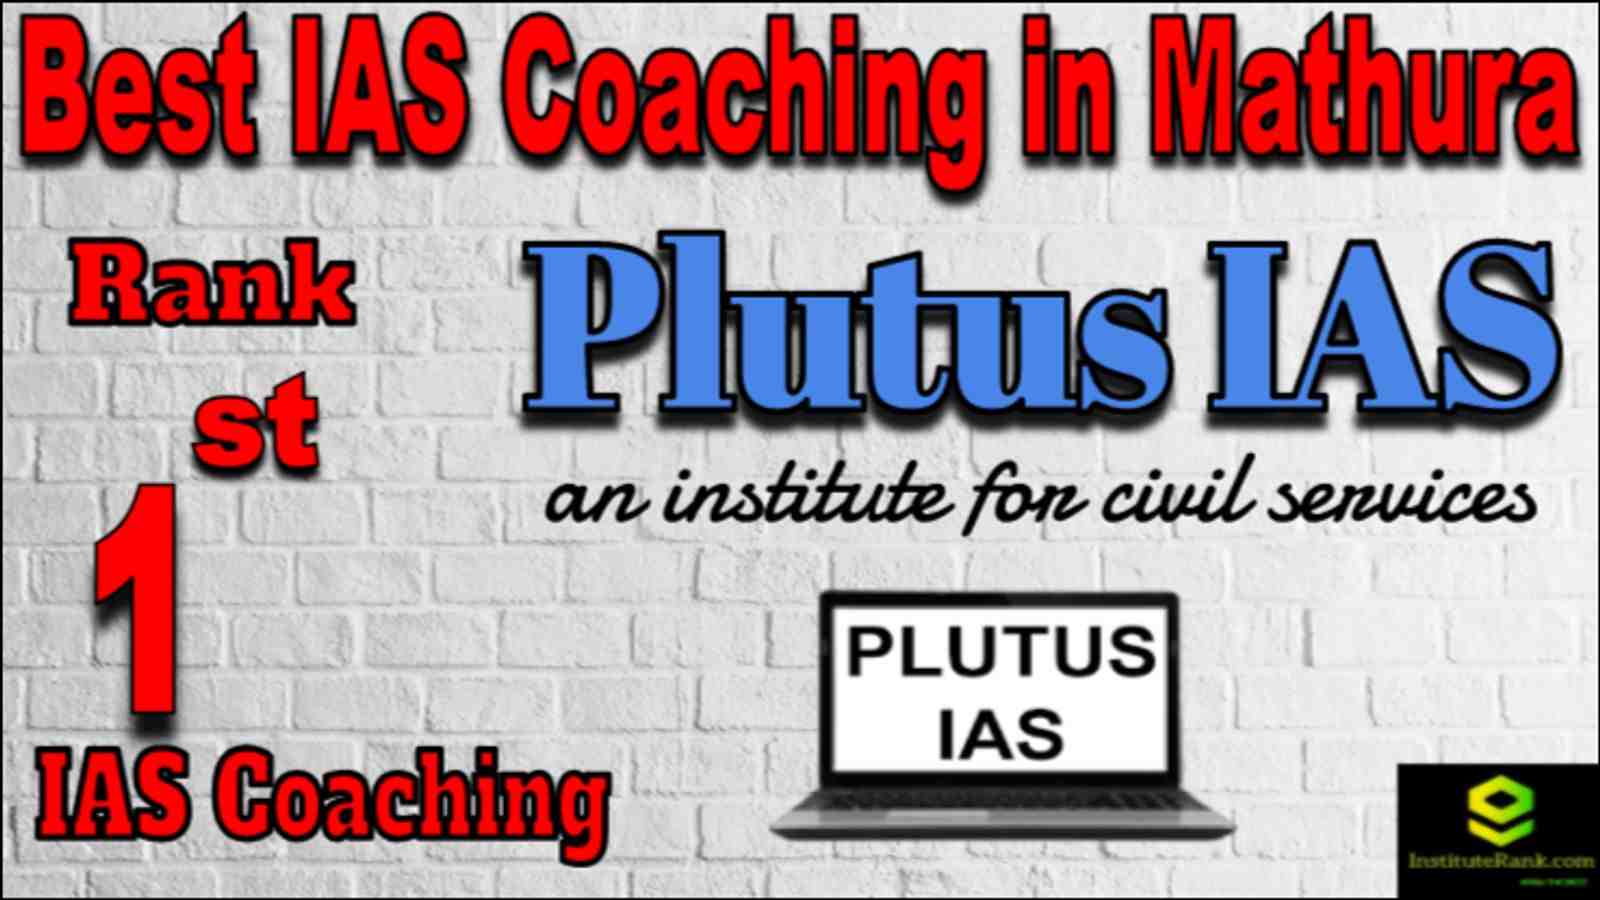 Rank 1 Best IAS coaching in Mathura